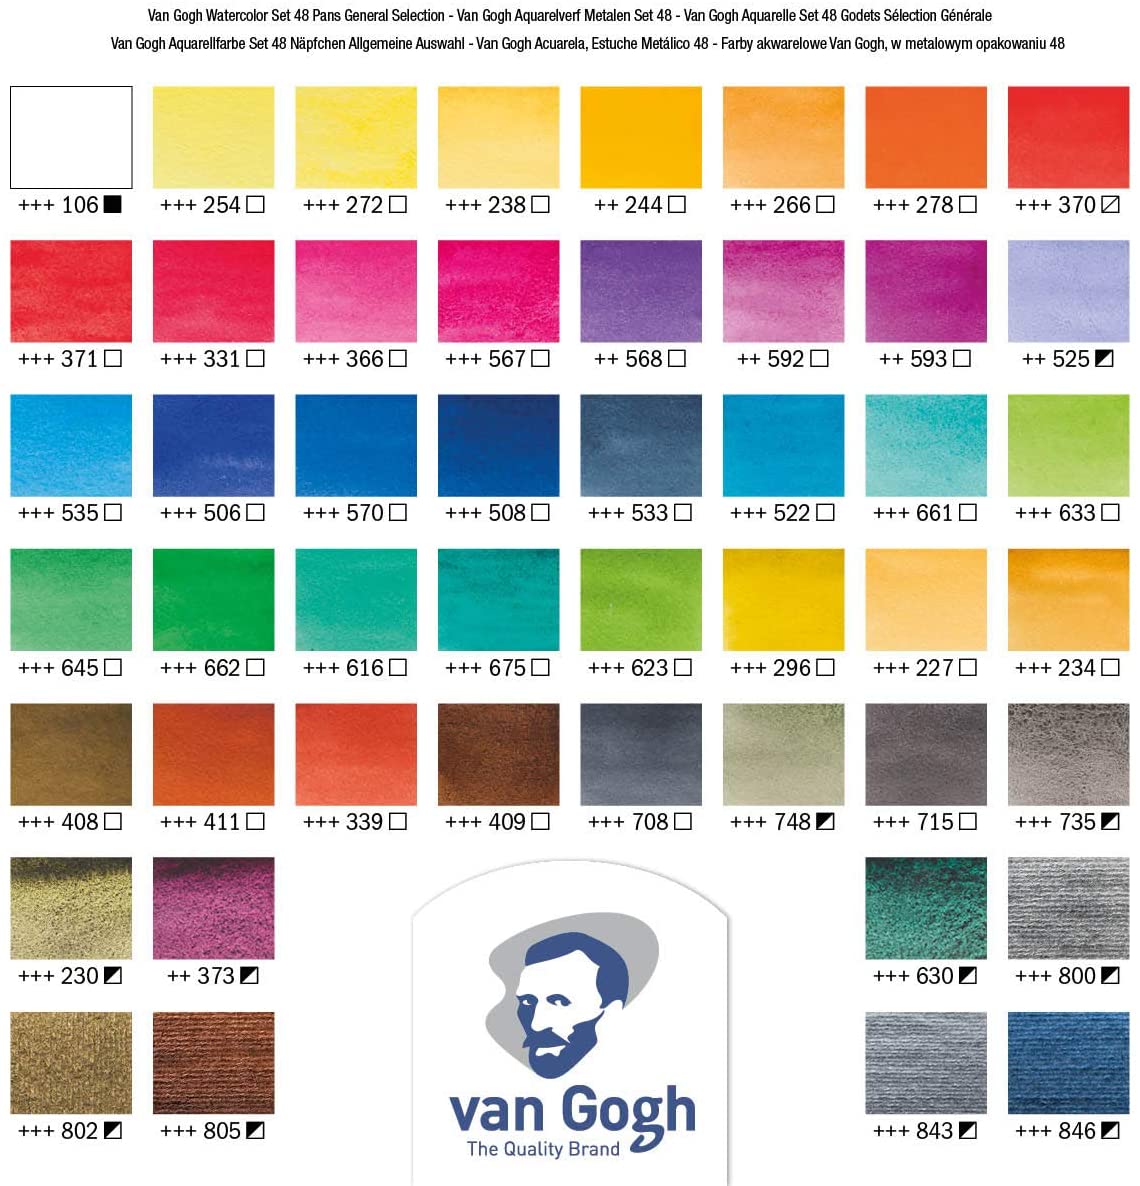 Van Gogh Watercolors Set - Metal Tin Set, 48 Half-Pans 